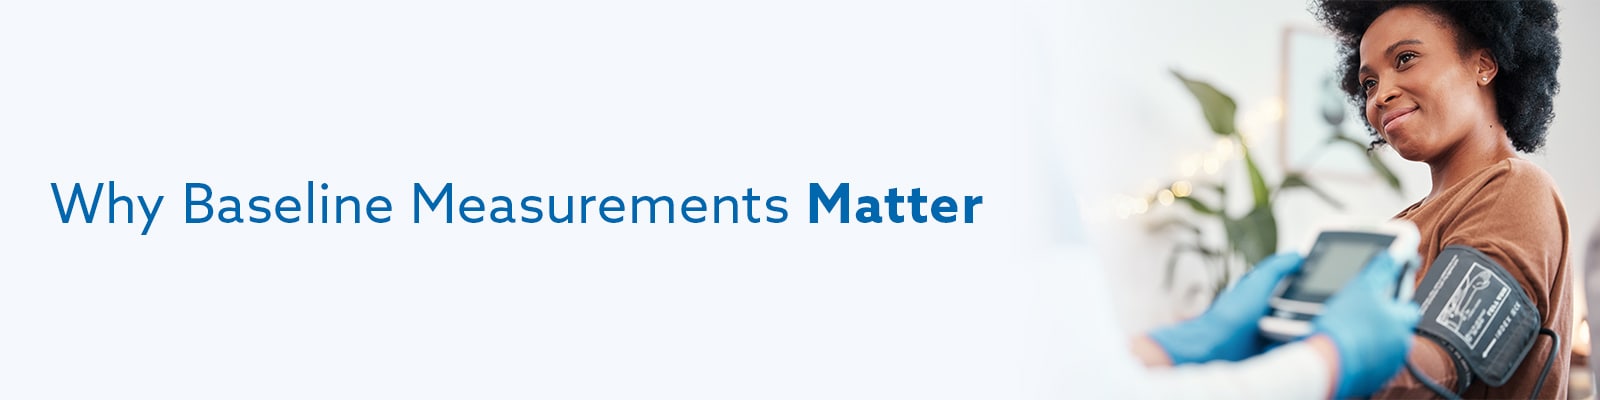 Why Baseline Meaurements Matter